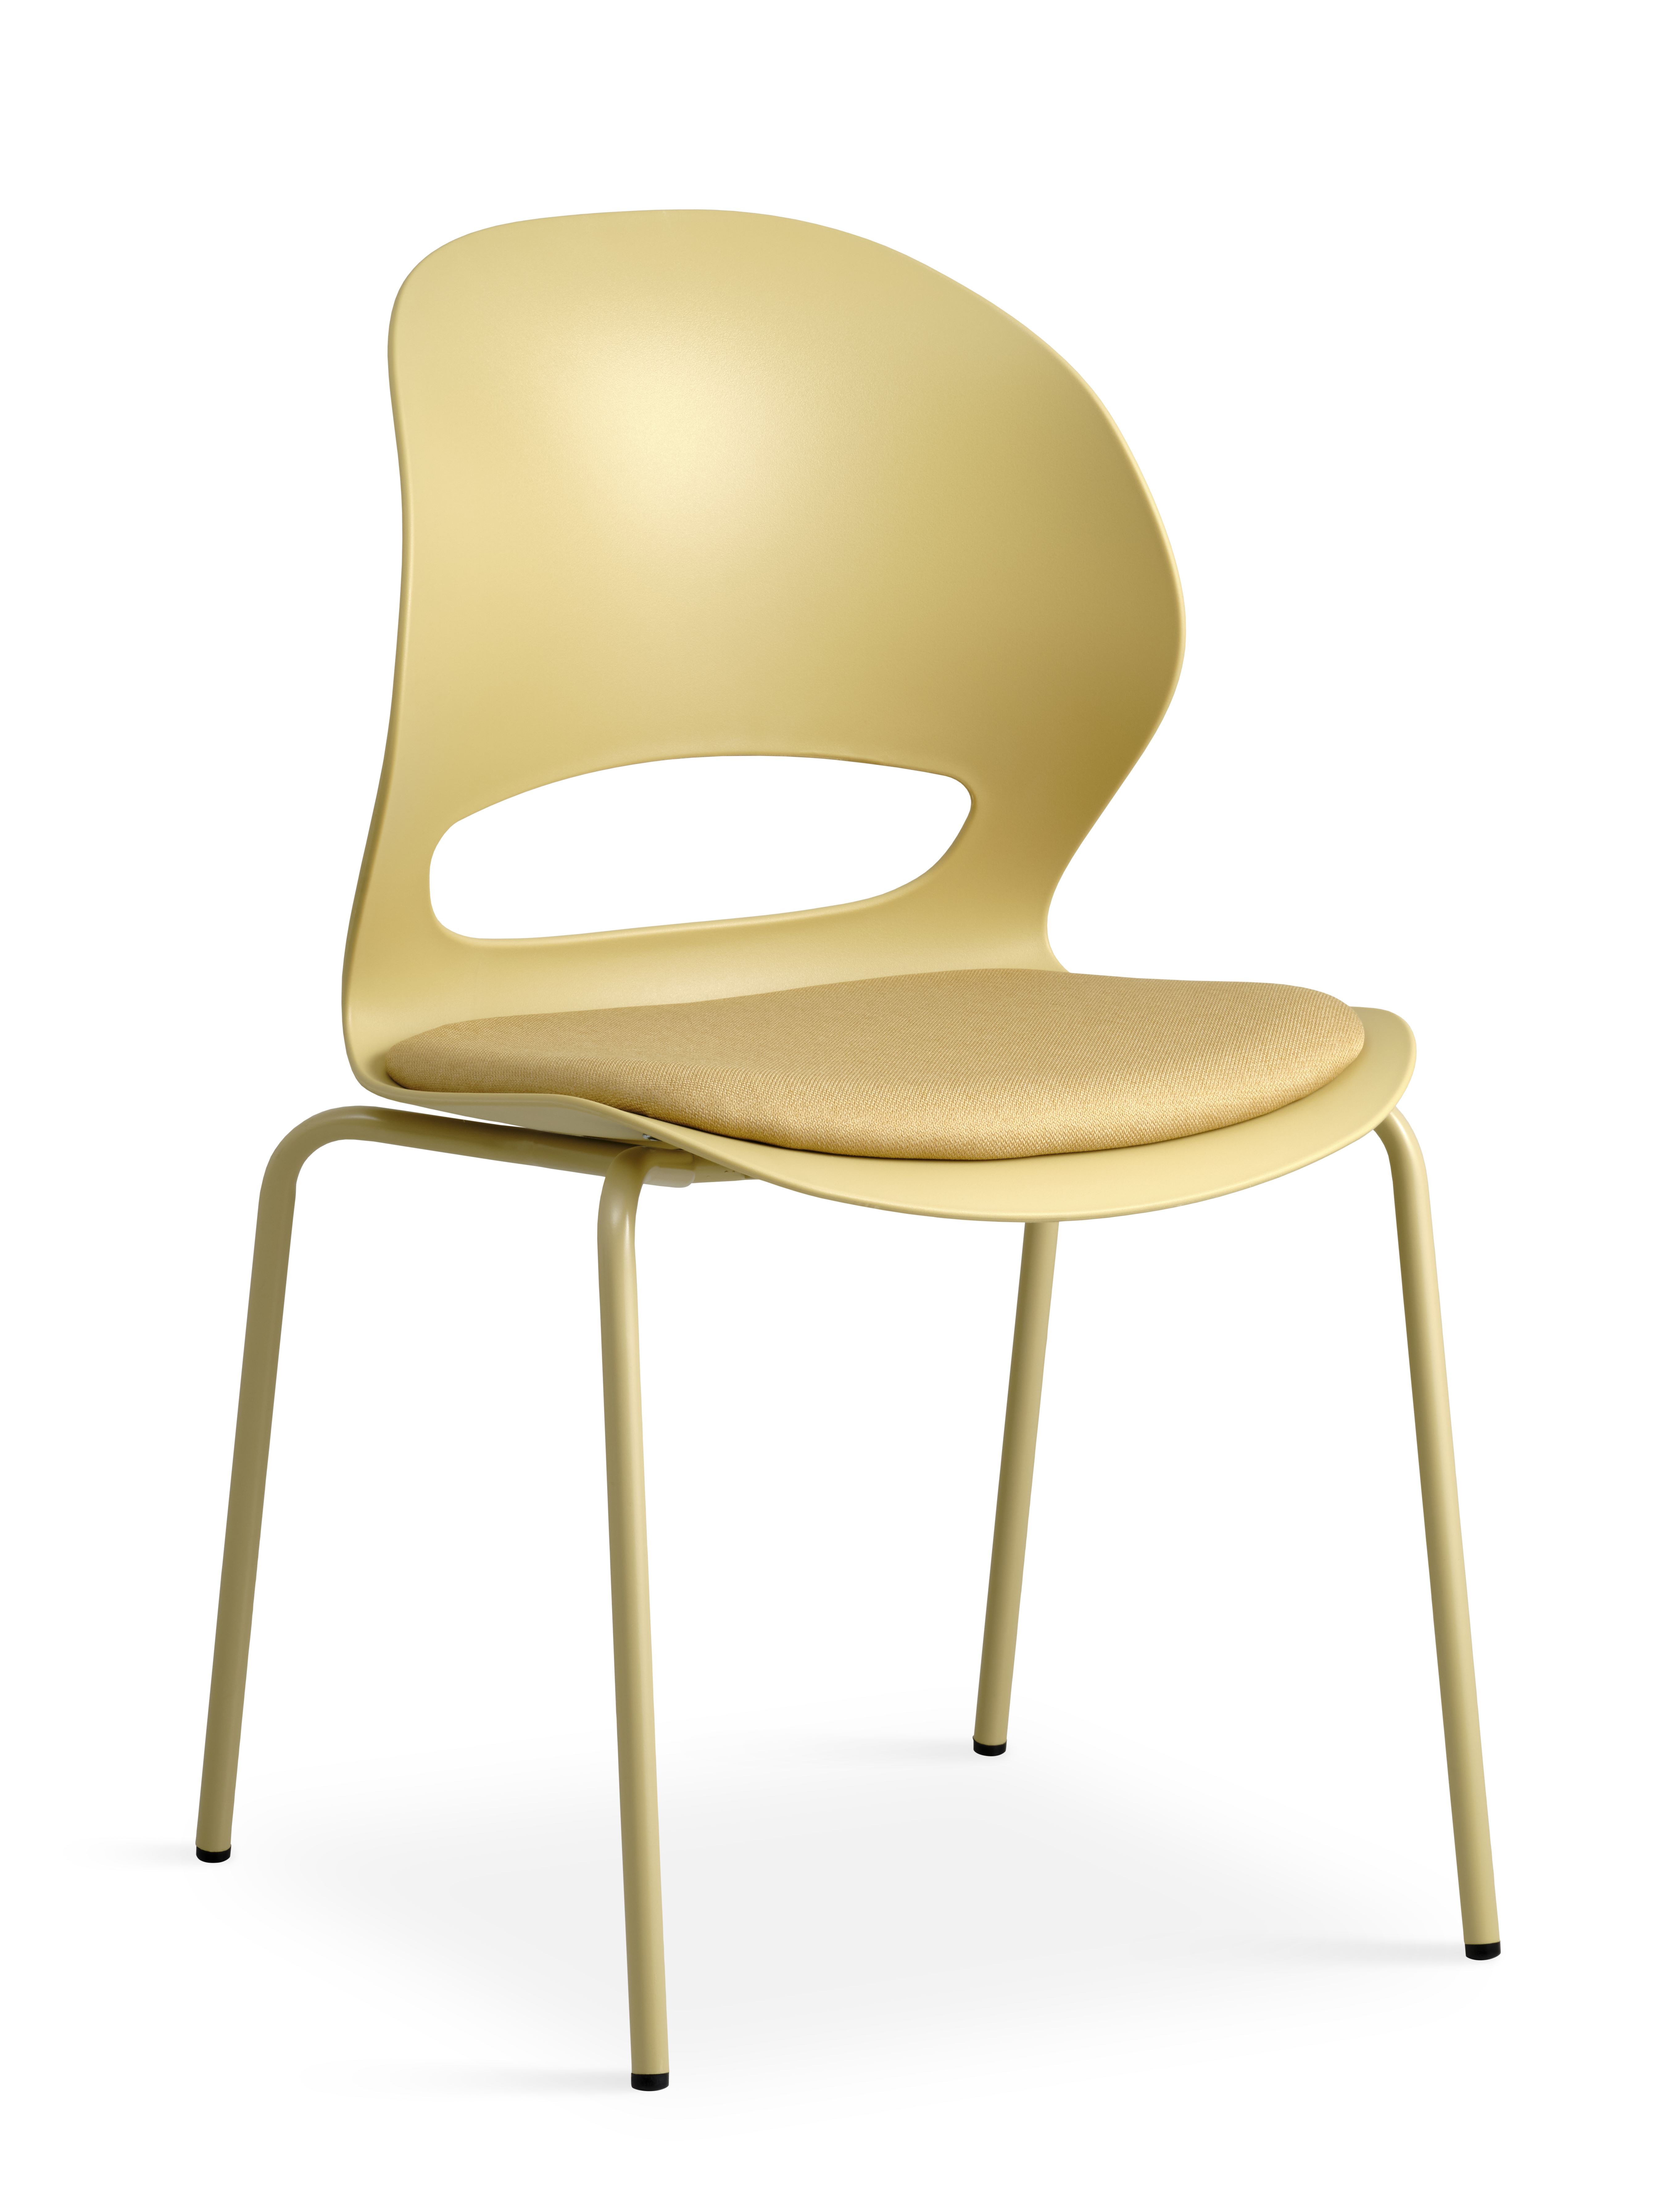 Linea spisebordsstol, m. sennepsgul stofhynde - sennepsgul PVC og sennepsgul metal